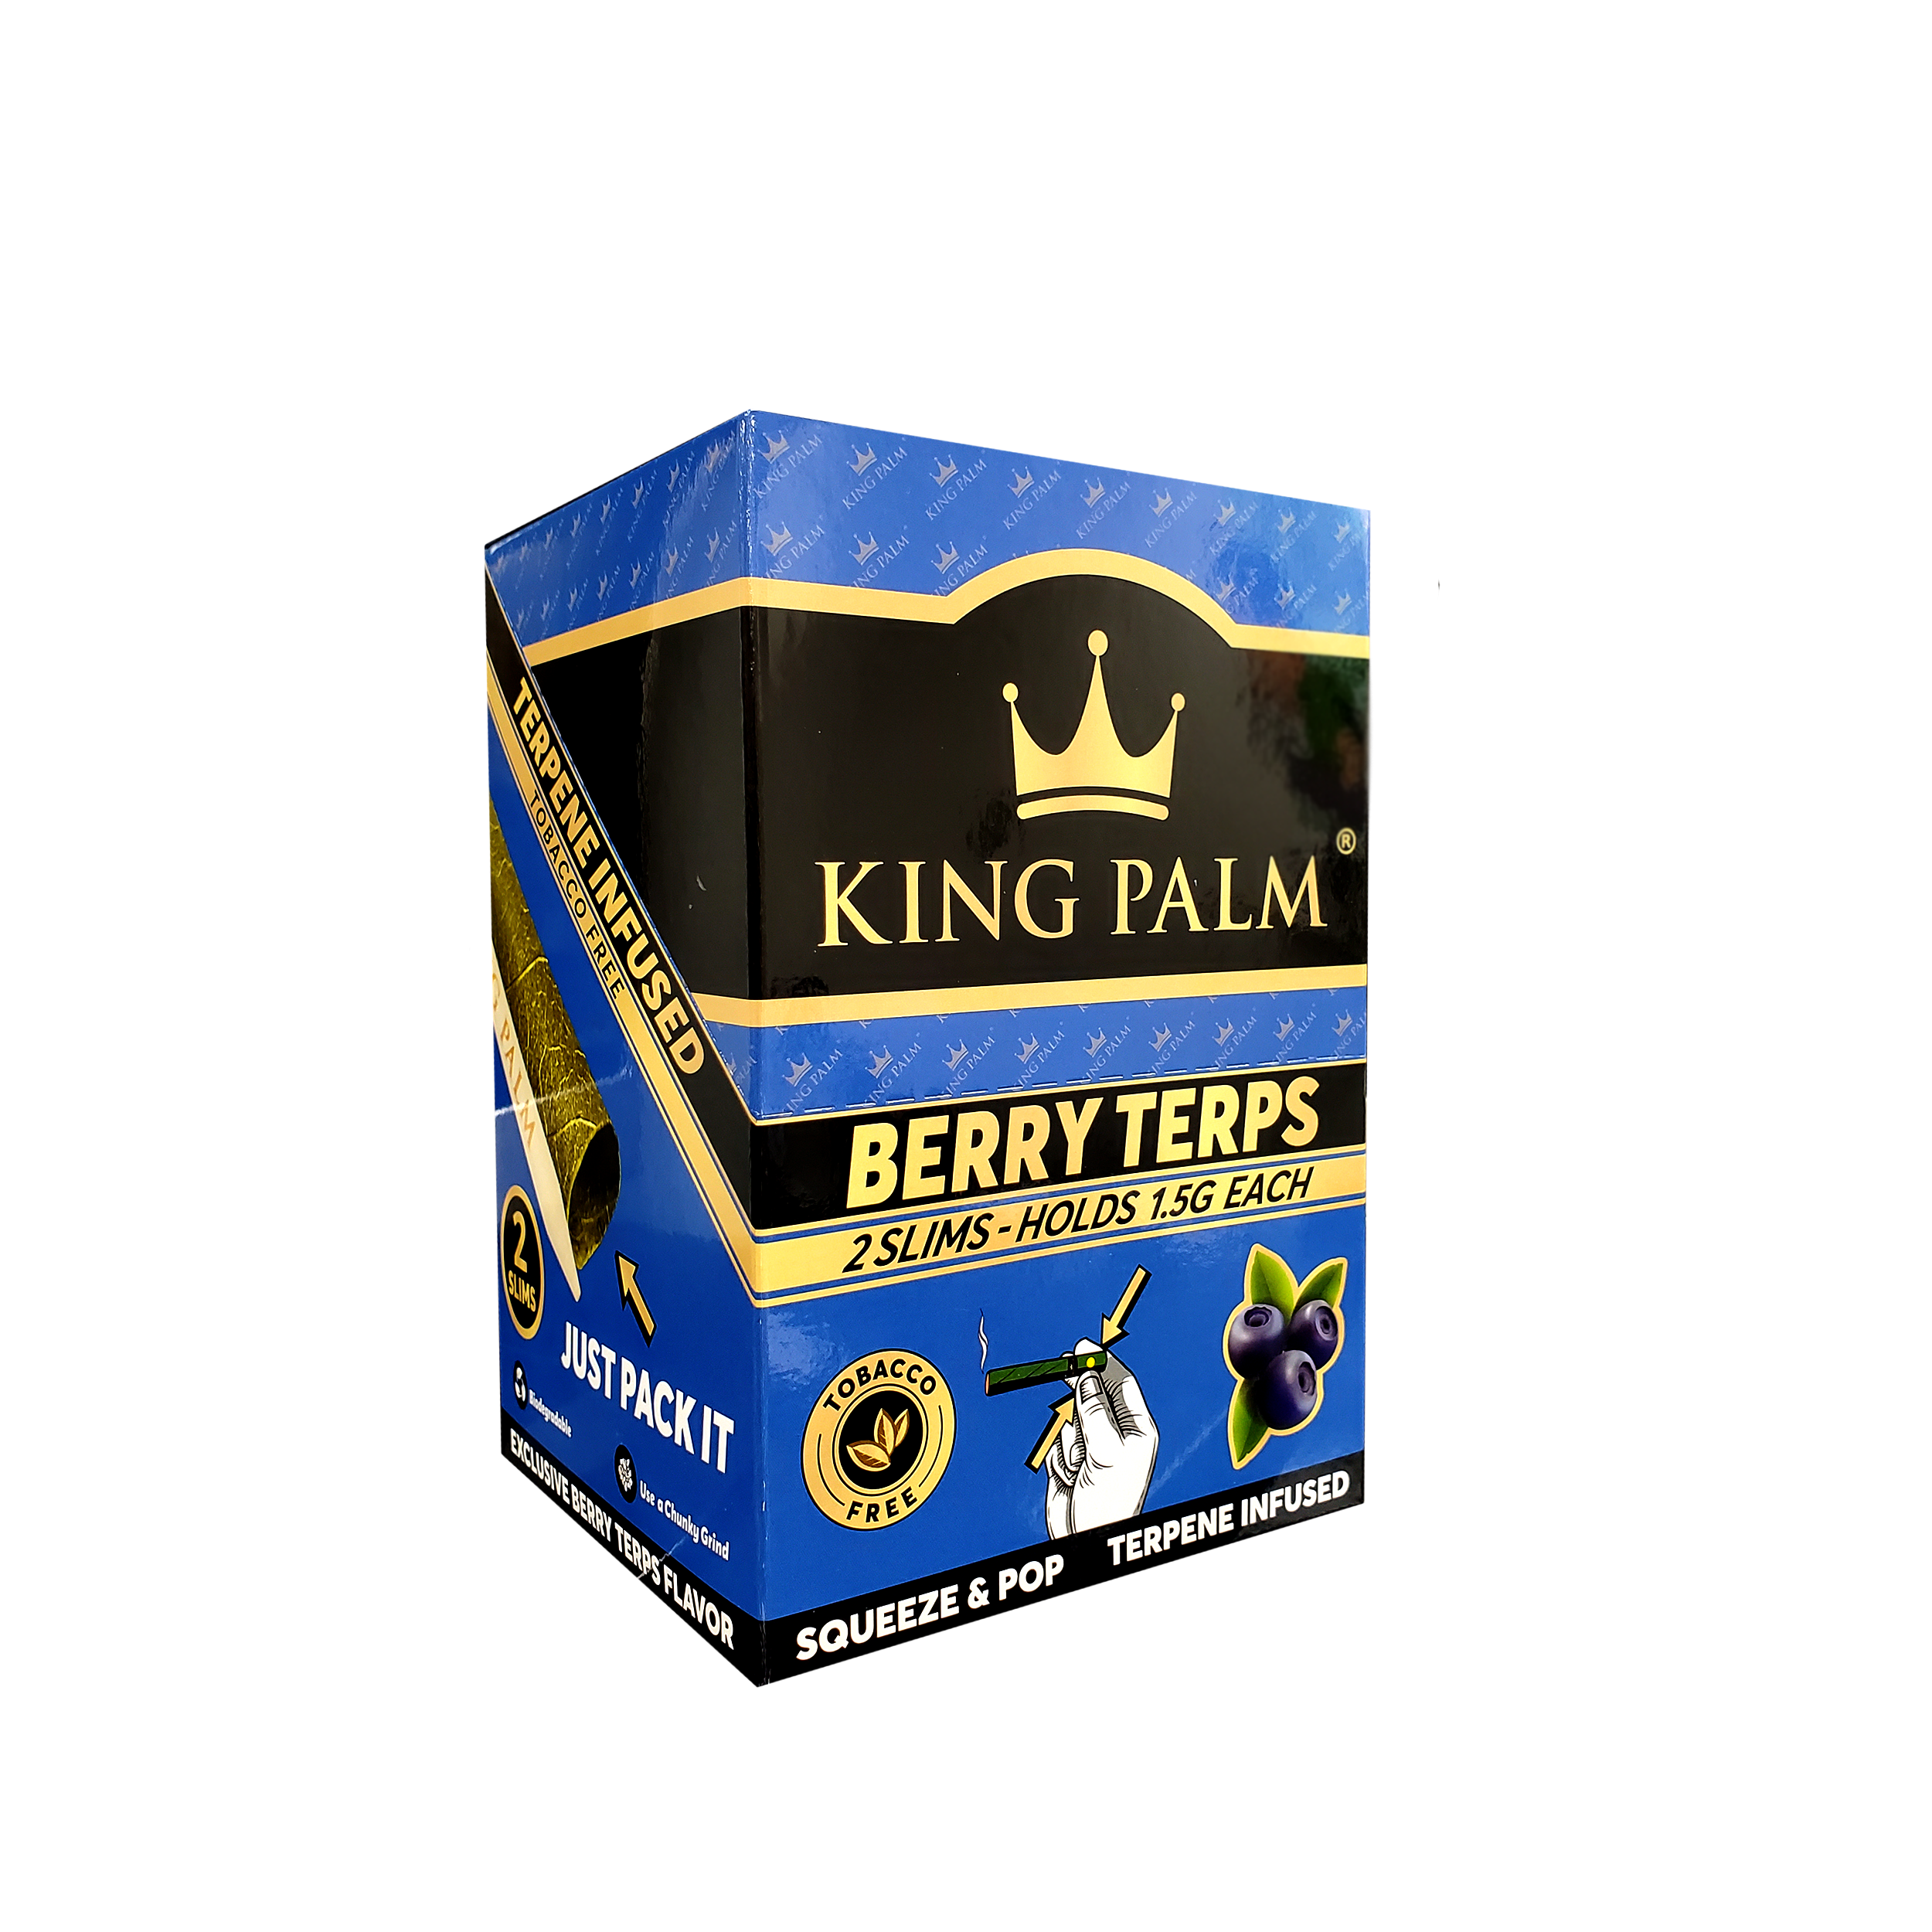 KING PALM 2 SLIM ROLLS 20PK DISPLAY - BERRY TERPS